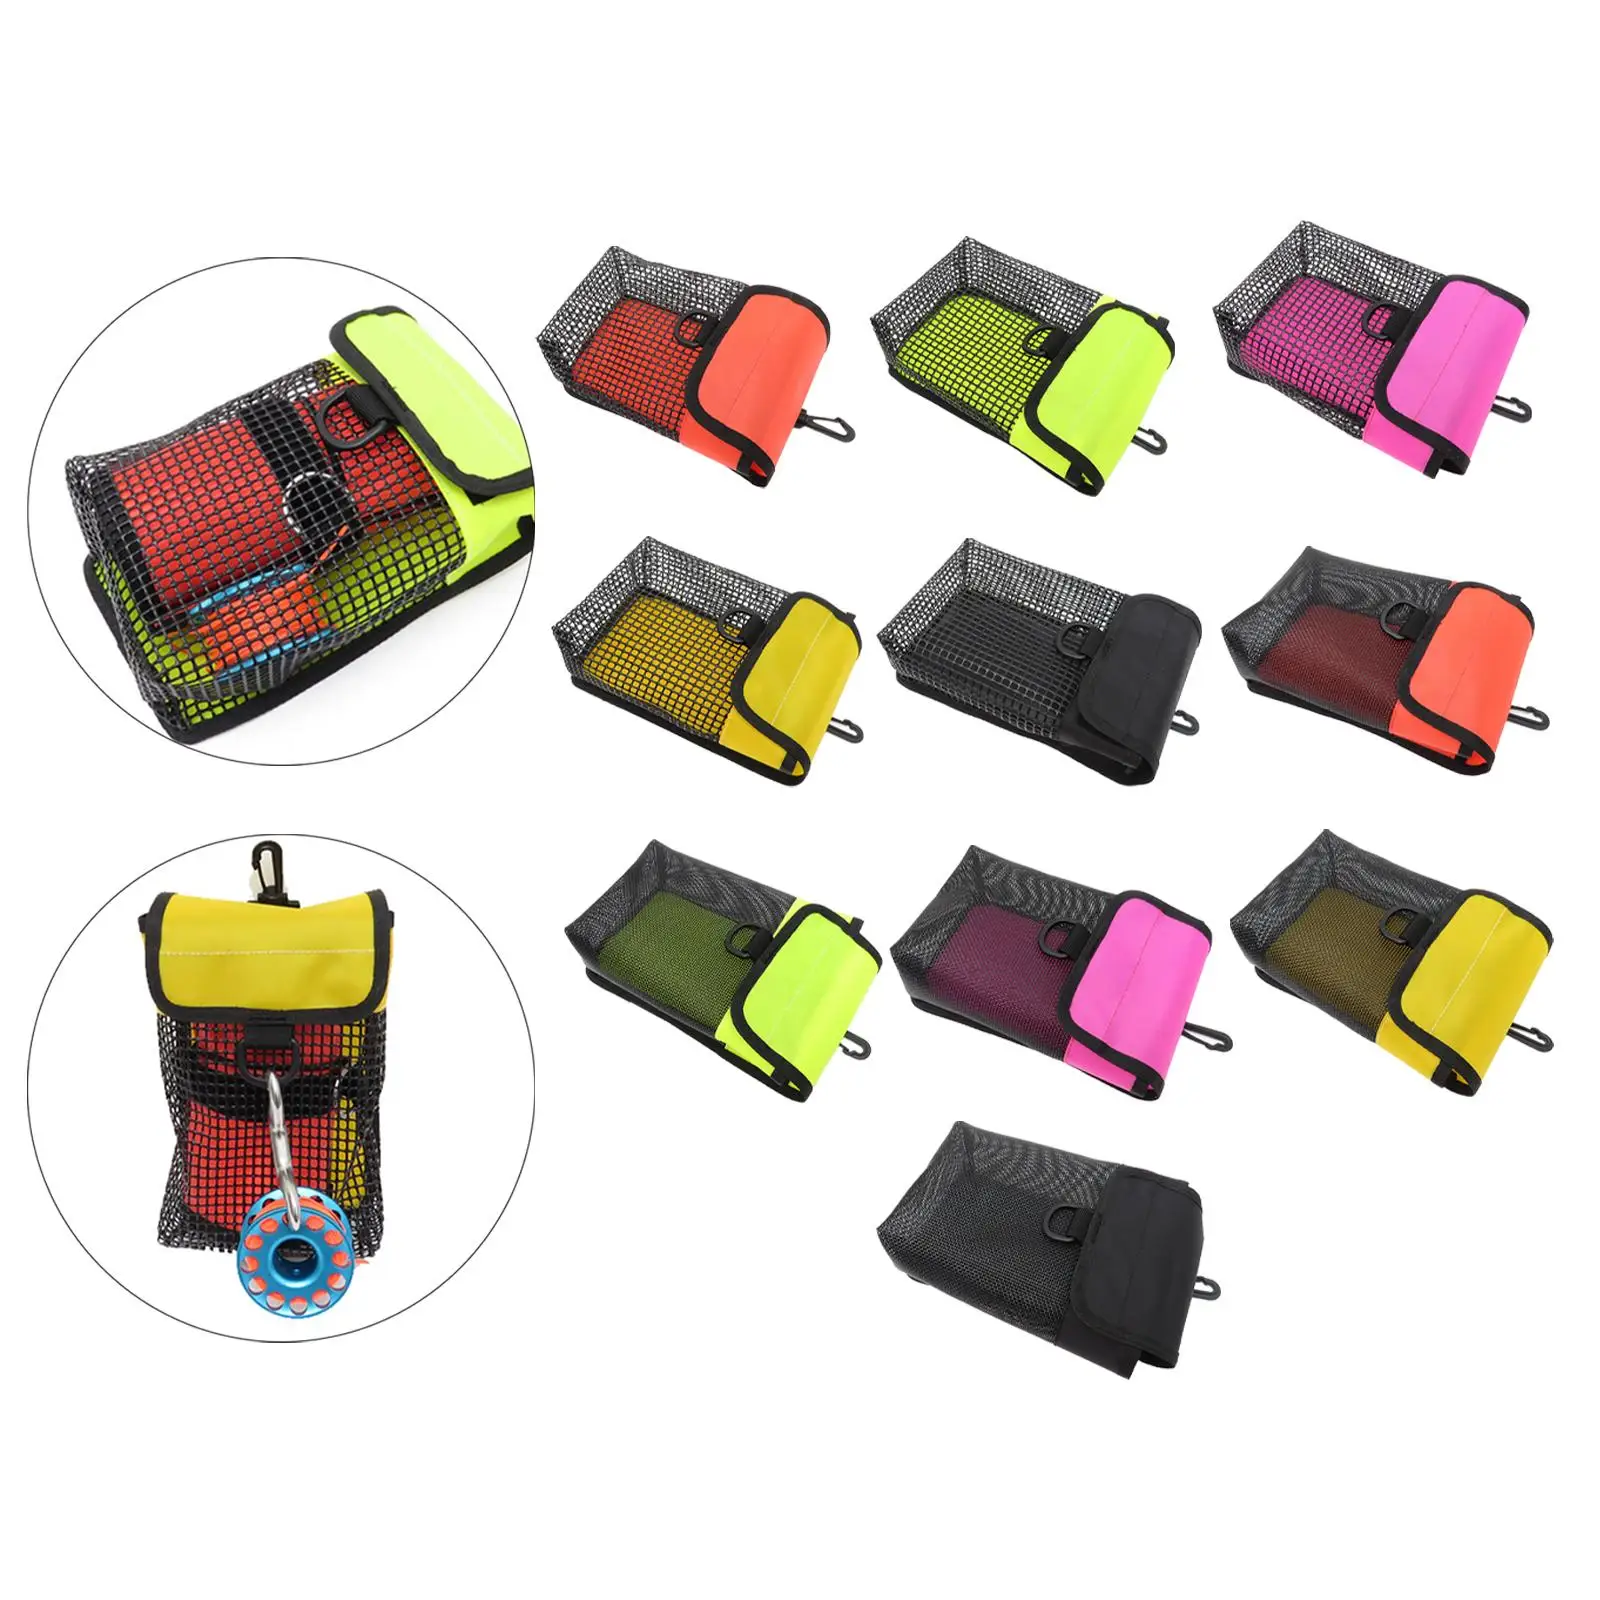 Scuba Gear Storage Bag Mesh Pocket Lightweight Nylon Portable Carry Bag with